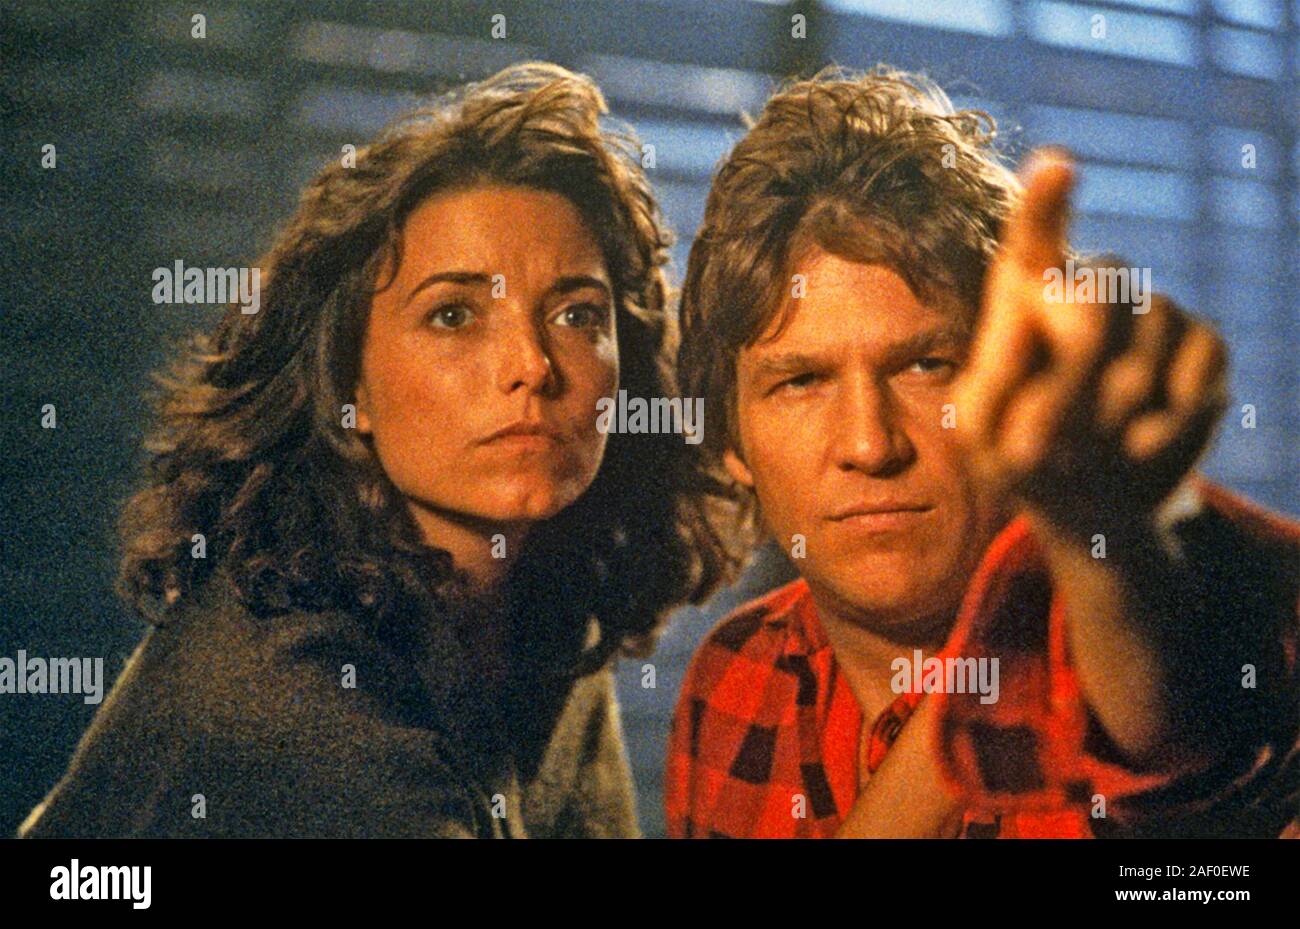 STARMAN 1984 Columbia Pictures Film con Jeff Bridges e Karen Allen Foto Stock